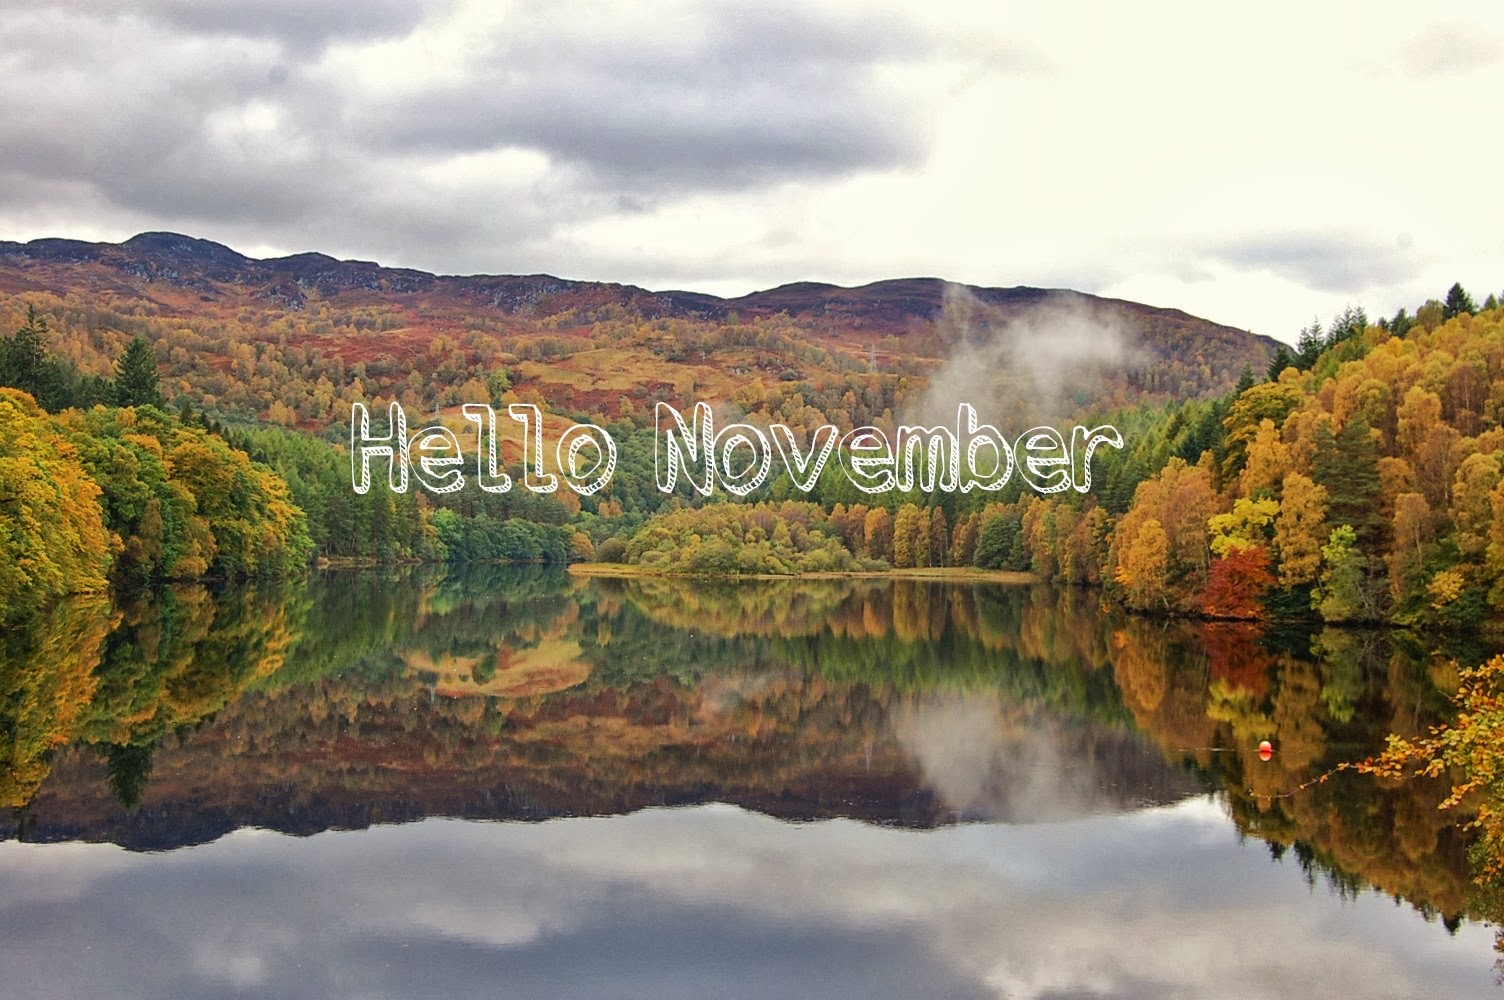 Hello November - my homemade graphic